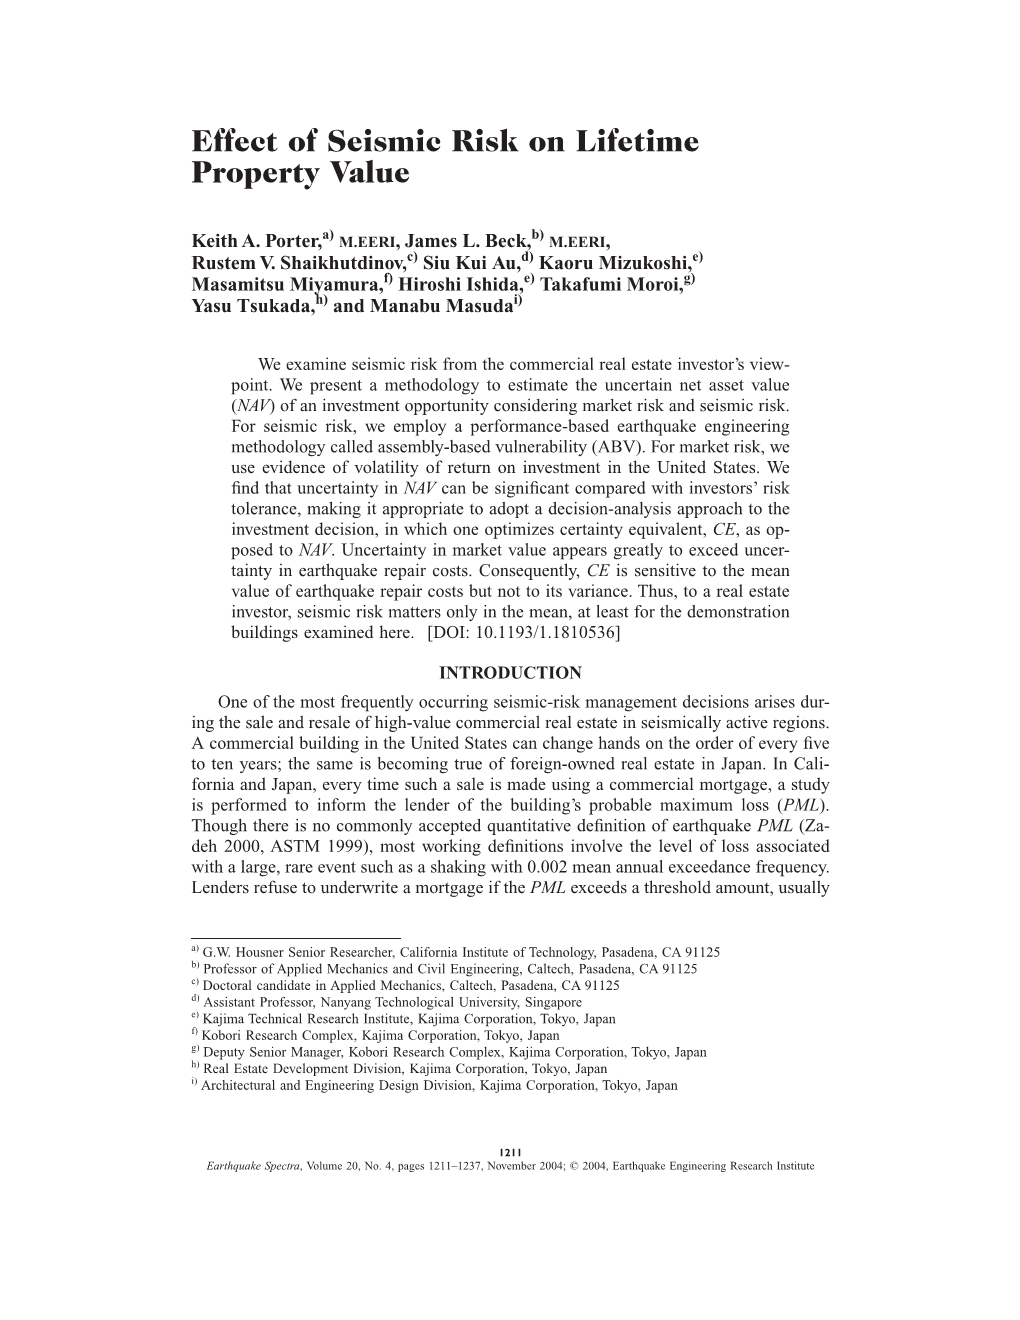 Effect of Seismic Risk on Lifetime Property Value